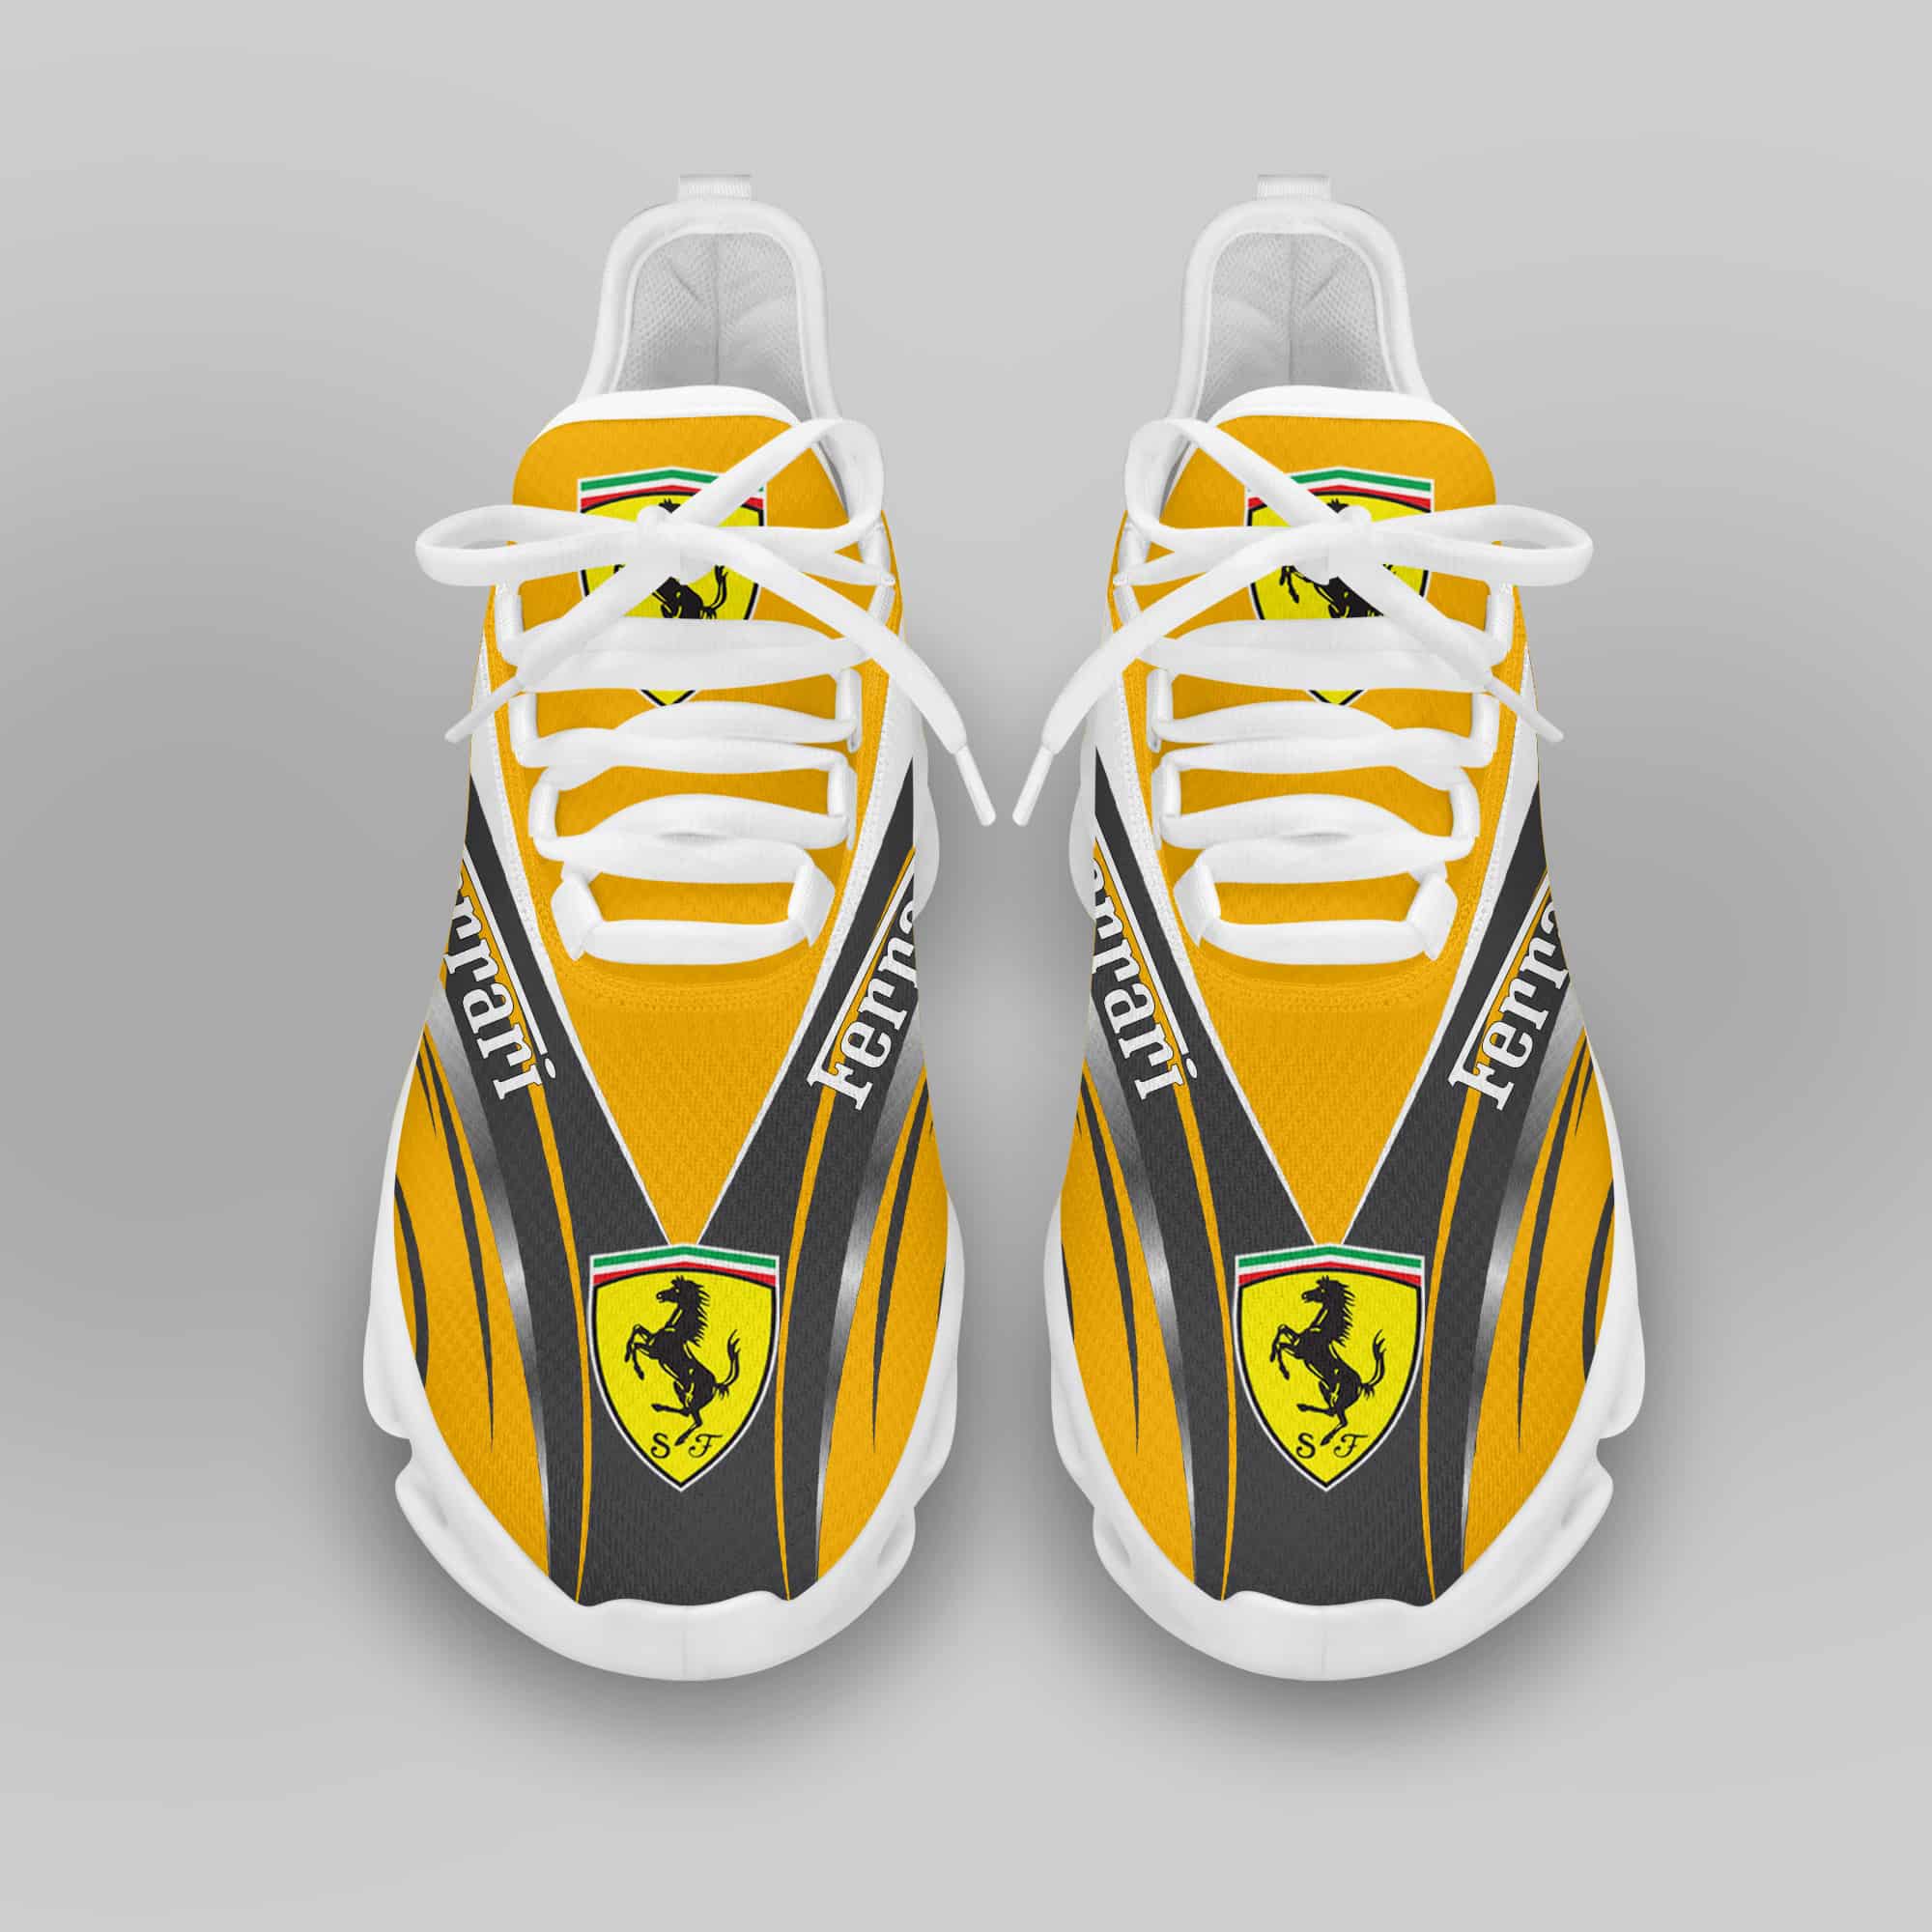 Ferrari Sneaker Running Shoes Max Soul Shoes Sneakers Ver 50 3